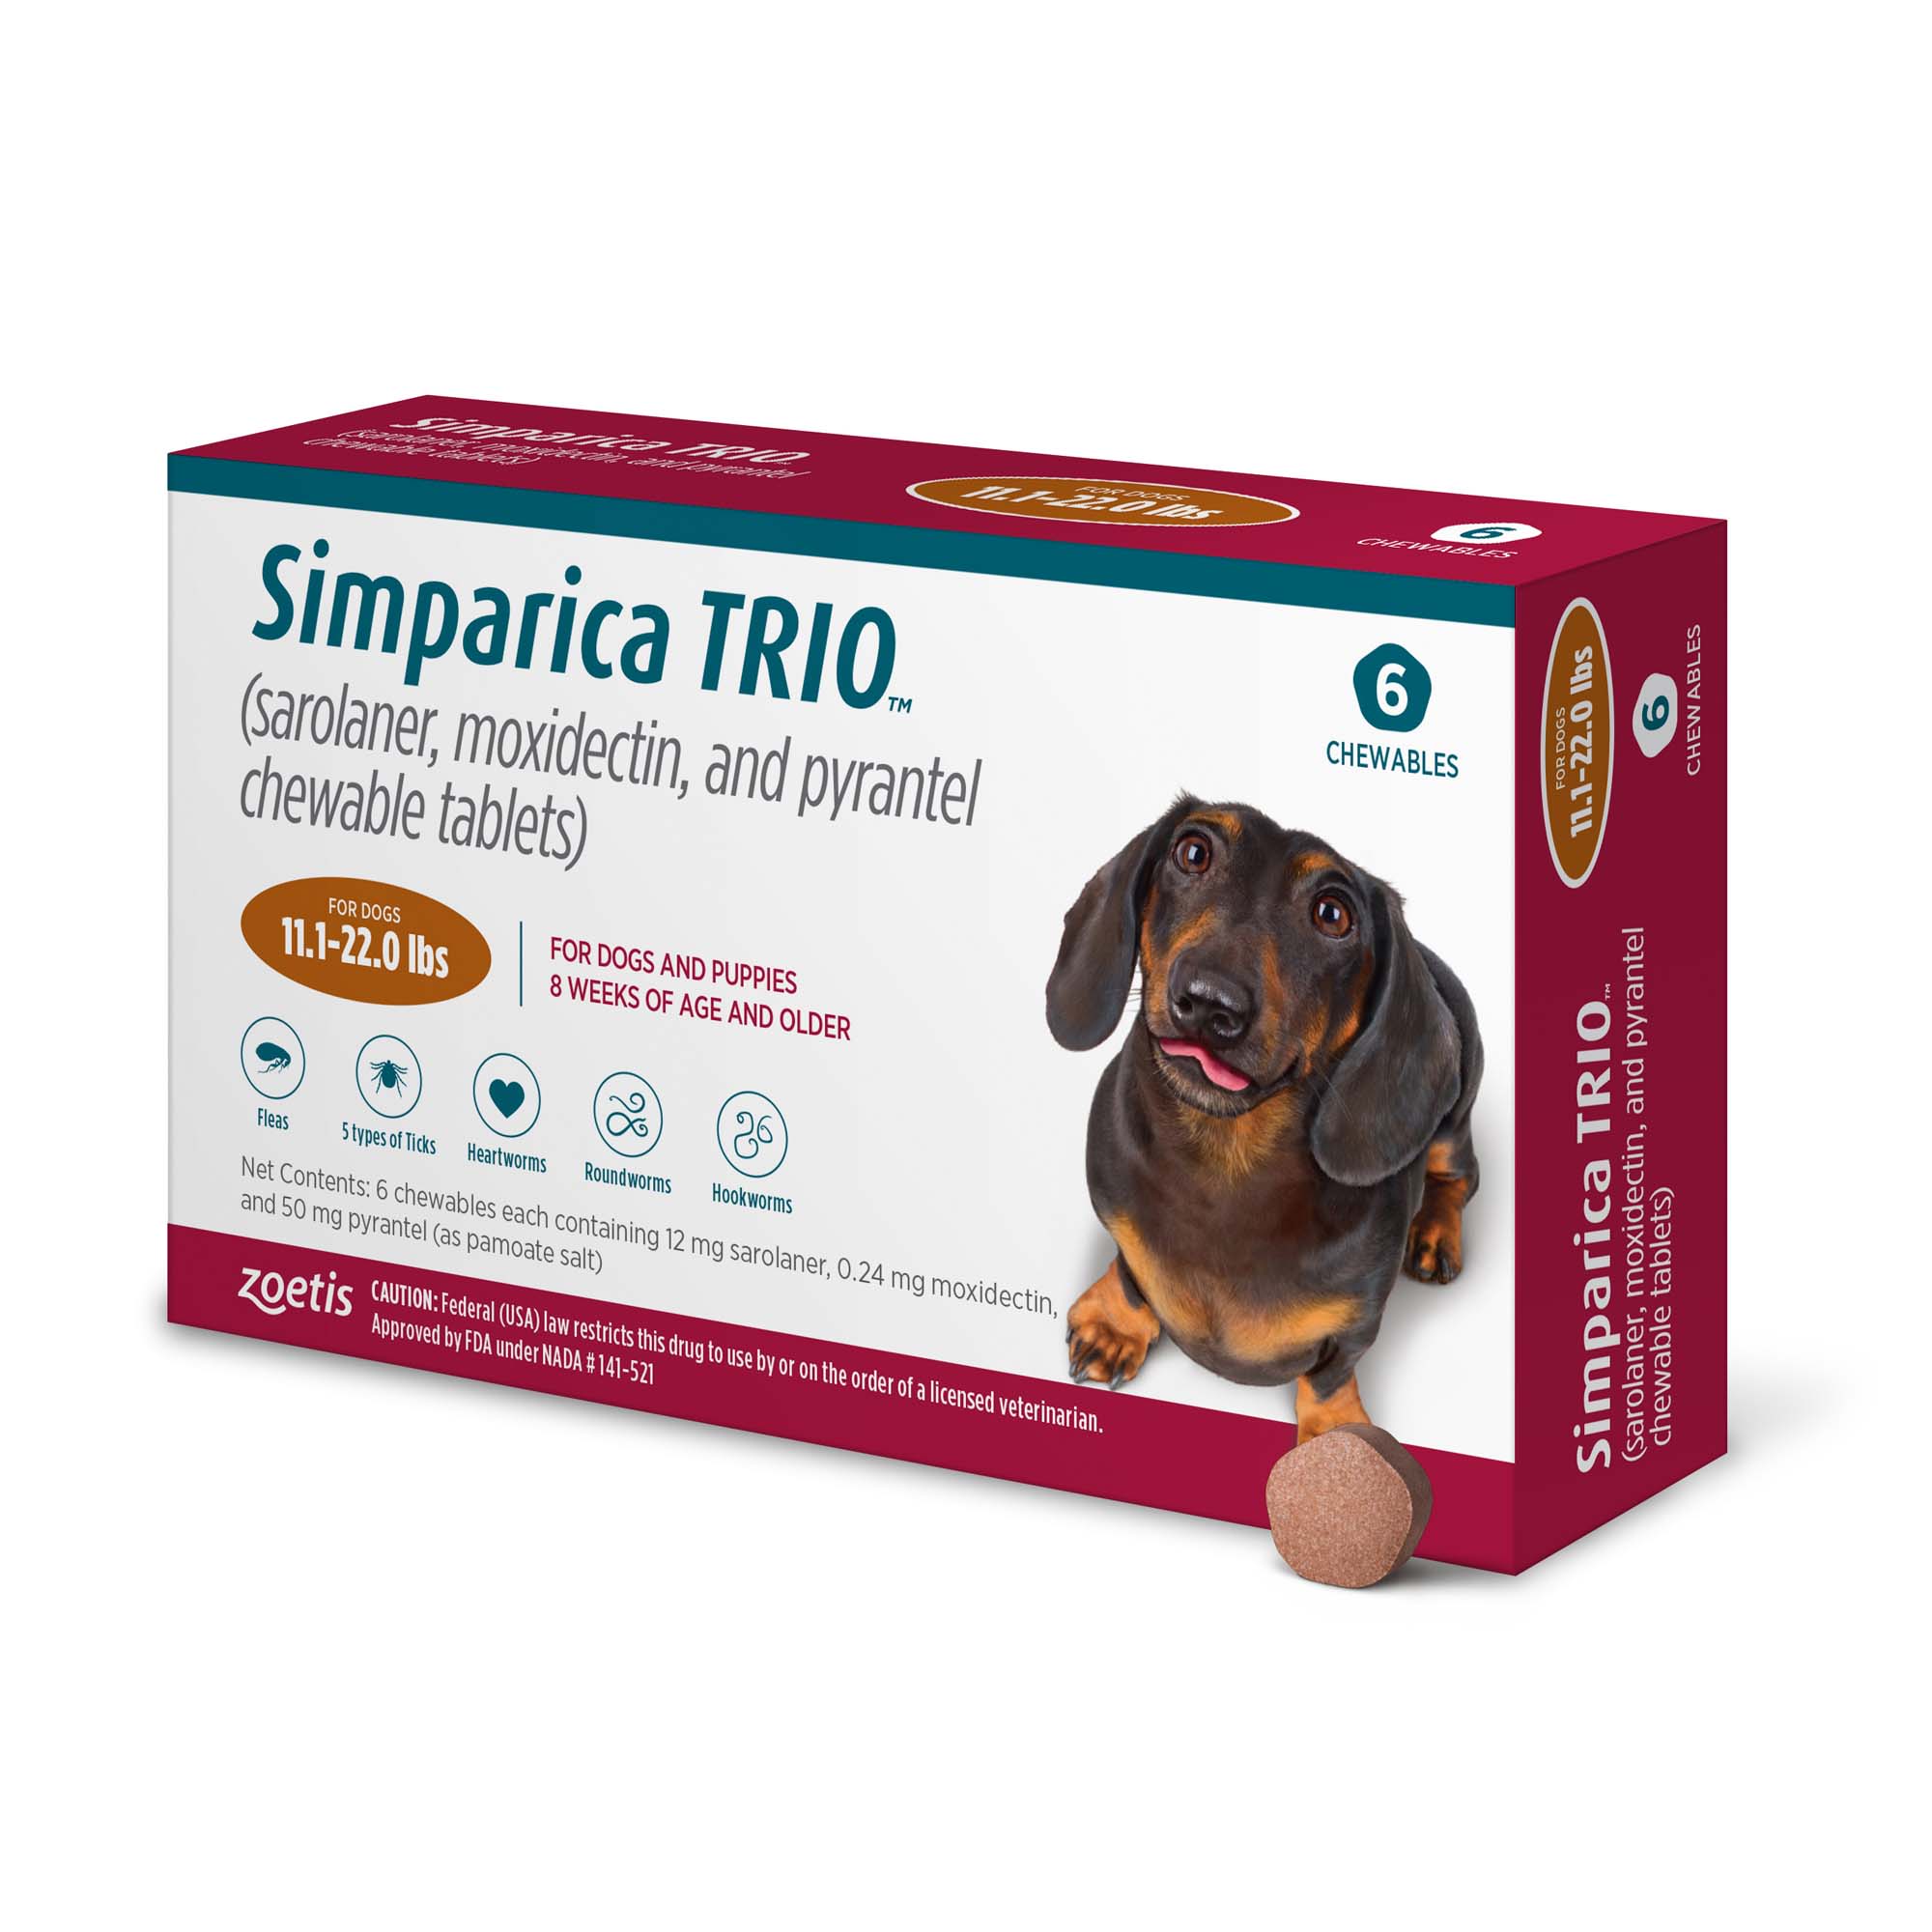 How to Get Simparica Trio Without Vet Prescription: A Simple Solution